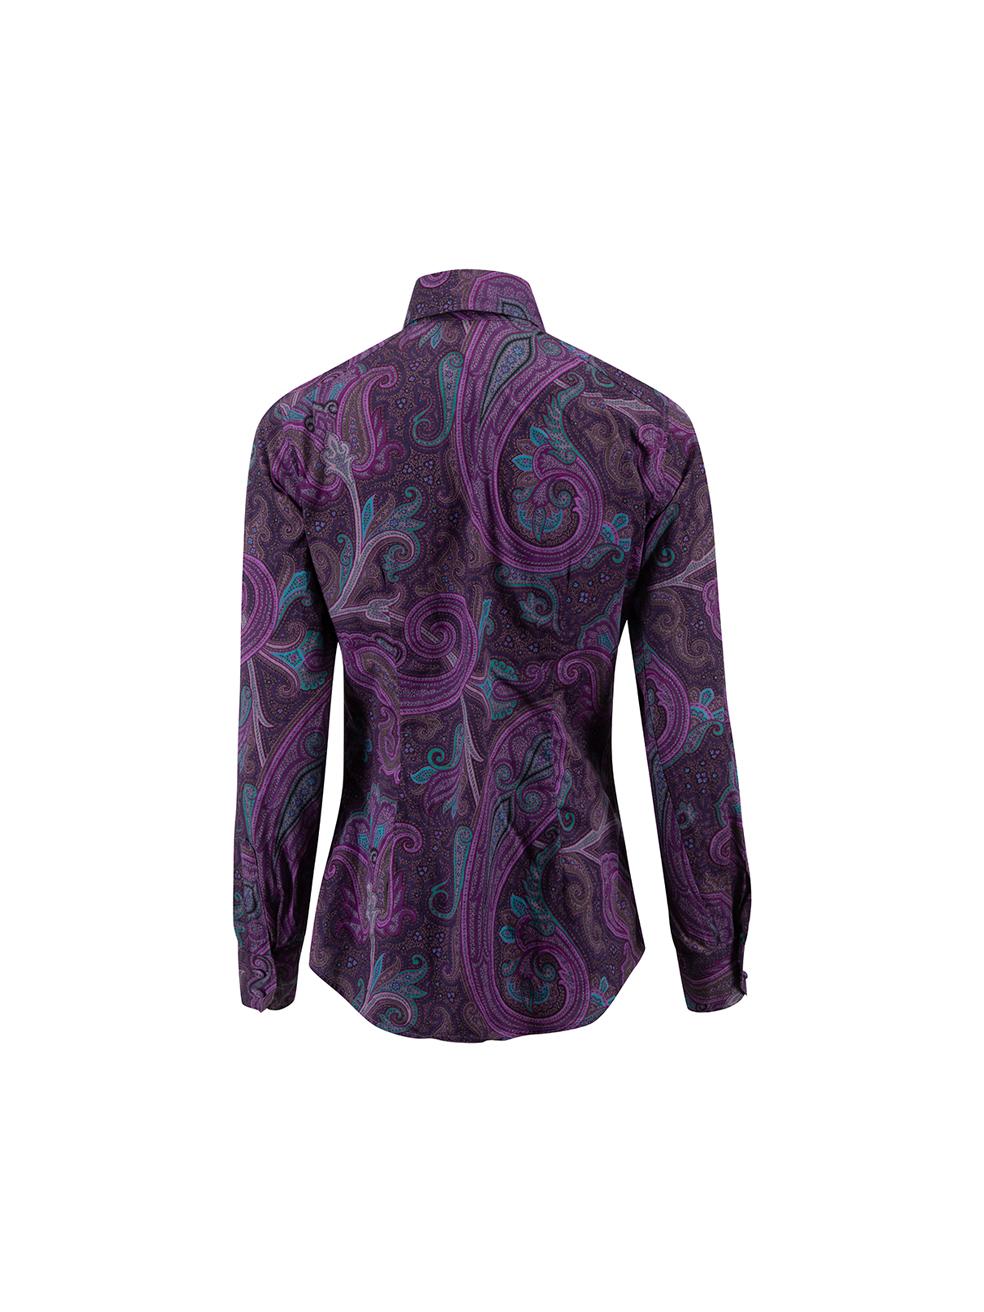 mens purple paisley shirt